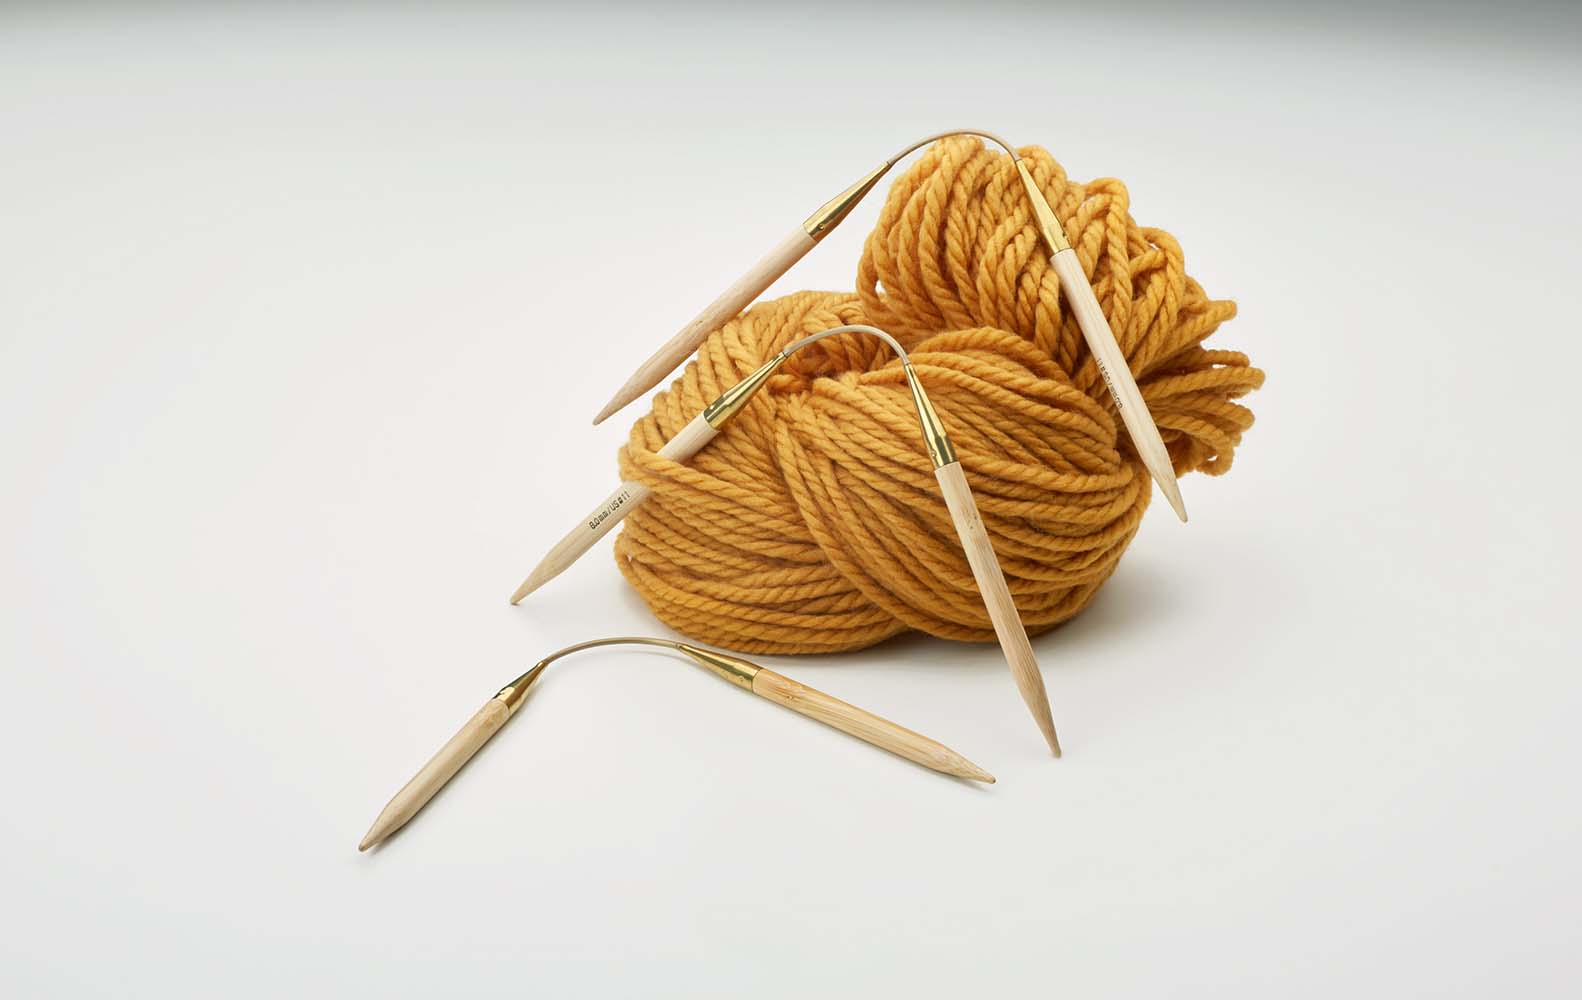 561 2 addiCraSyTrio Bamboo LONG bendable needle play needles 3 needles bamboo 4 8mm 30cm MadeinGermany mood rgb knitting needles,knitting needle material,material knitting needles